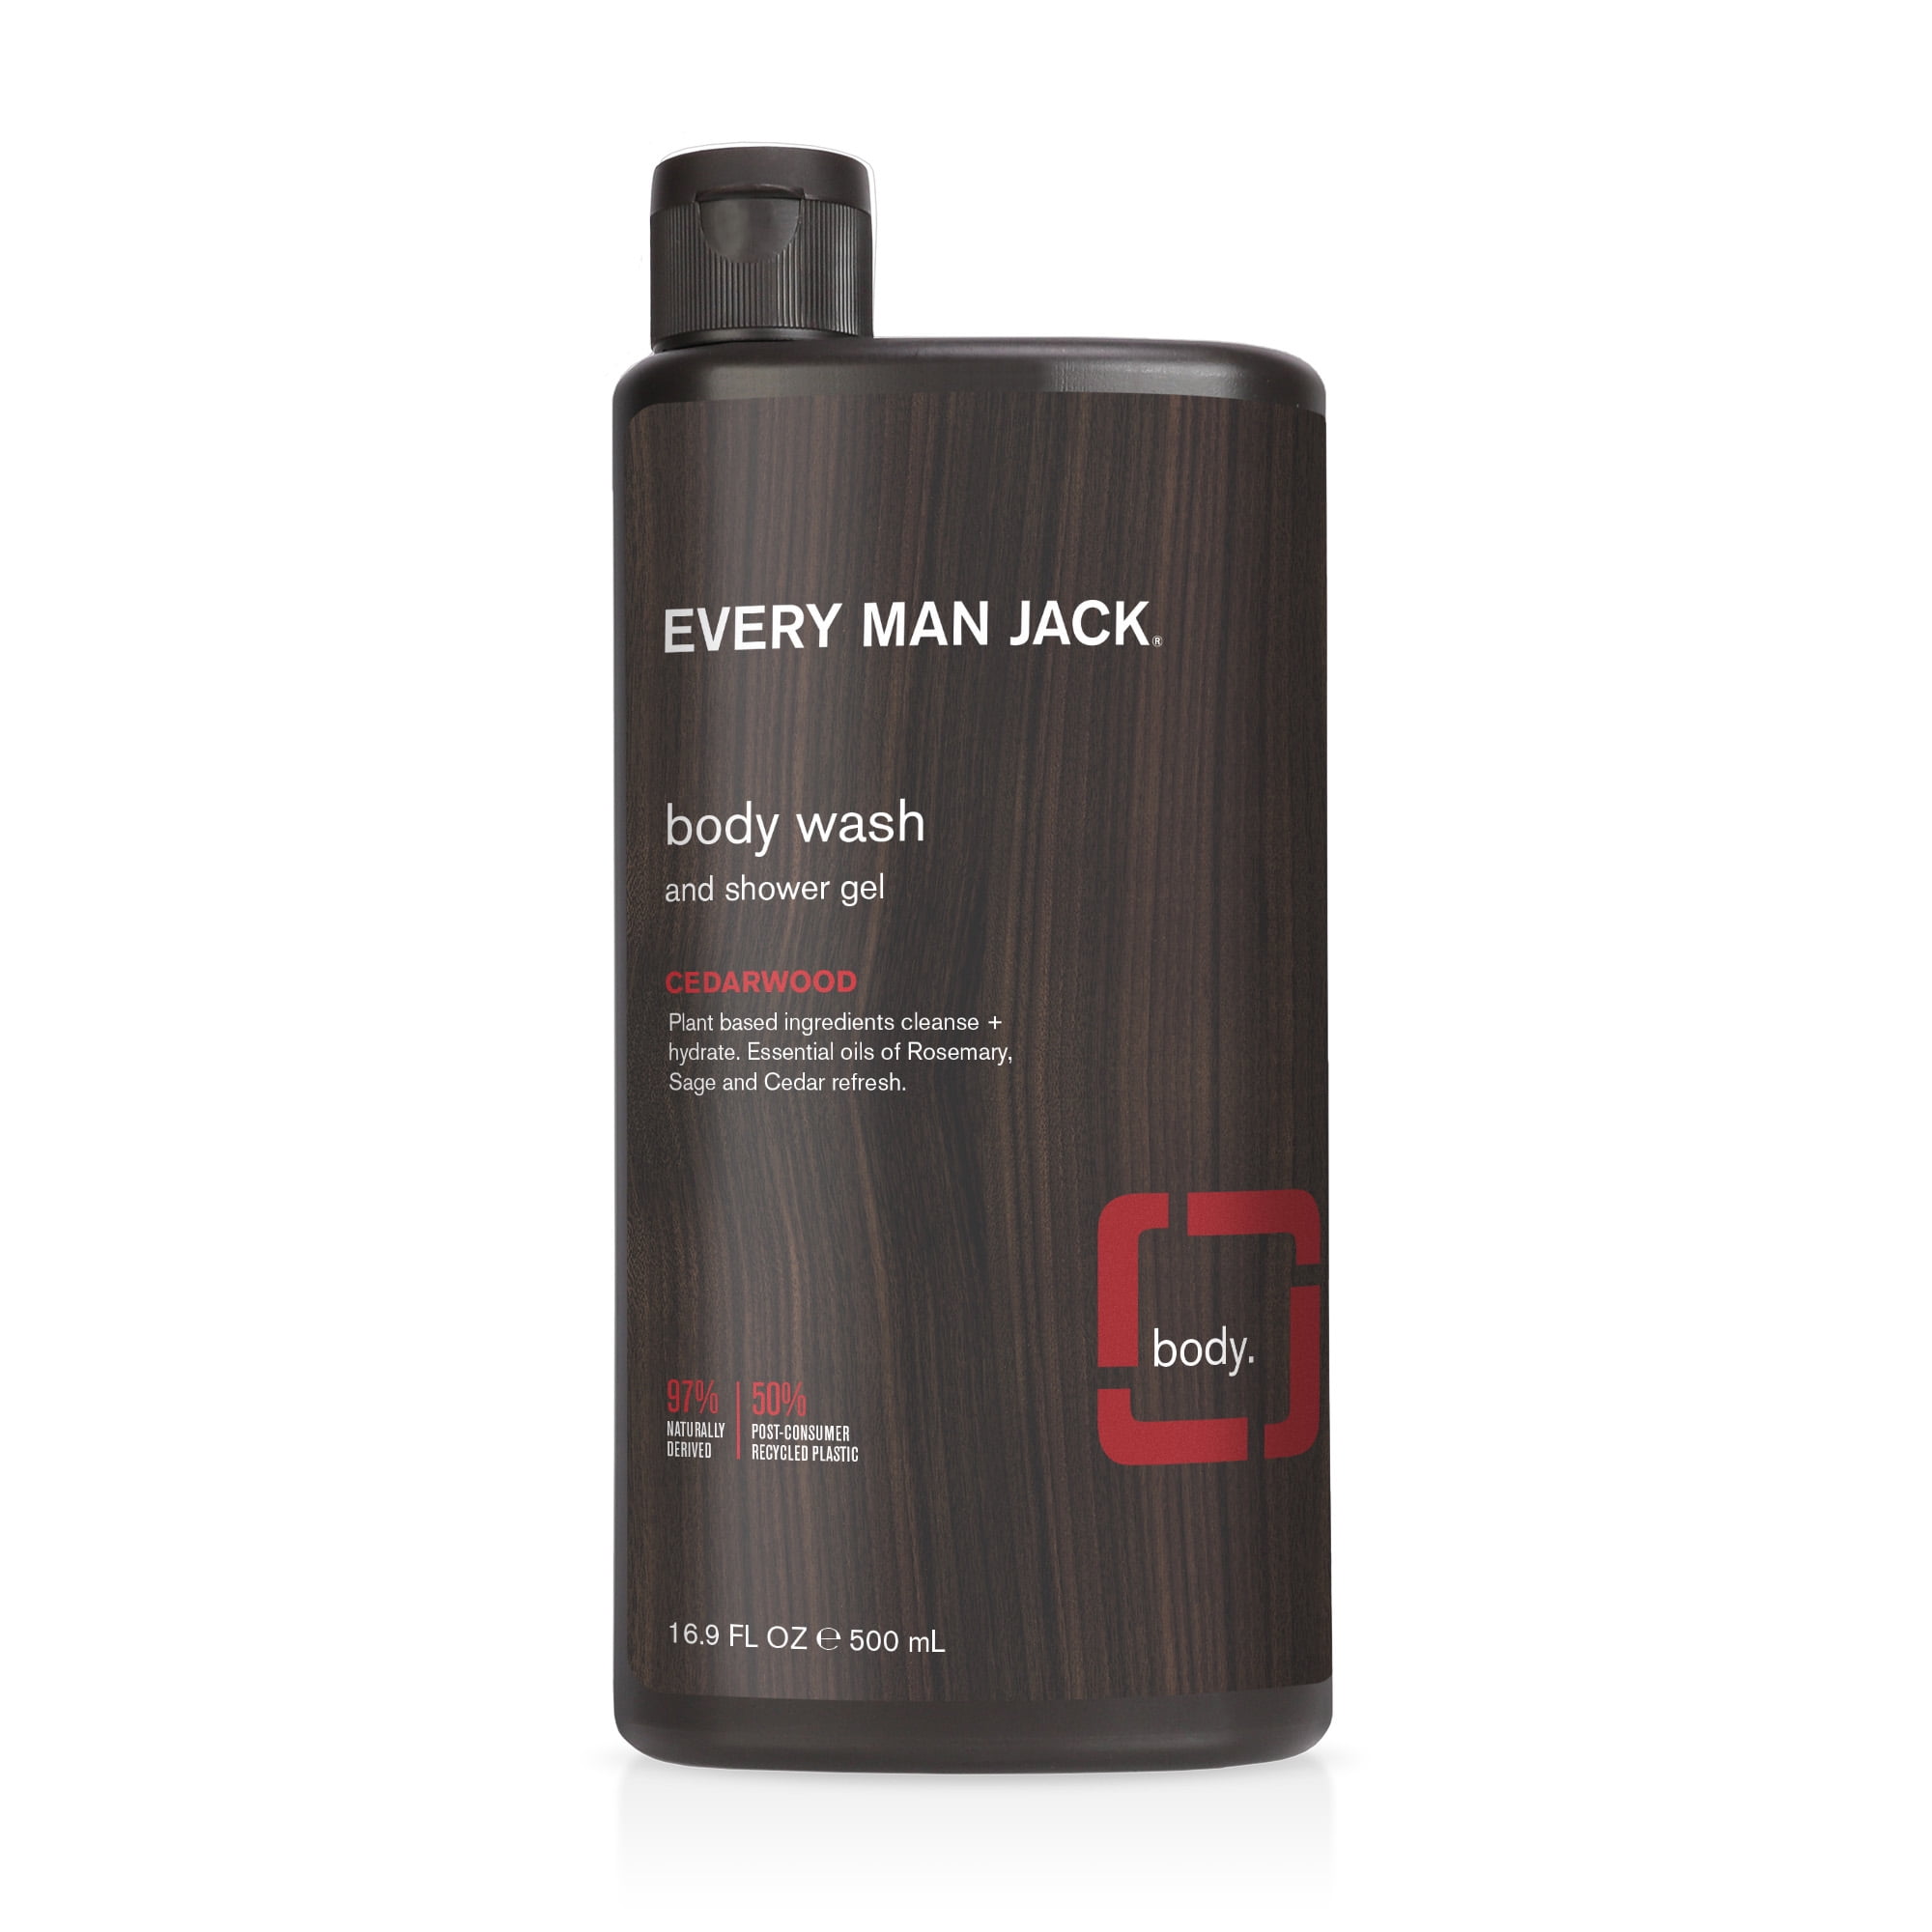 Every Man Jack Cedarwood Hydrating Body Wash for Men, Naturally Derived, 16.9 oz